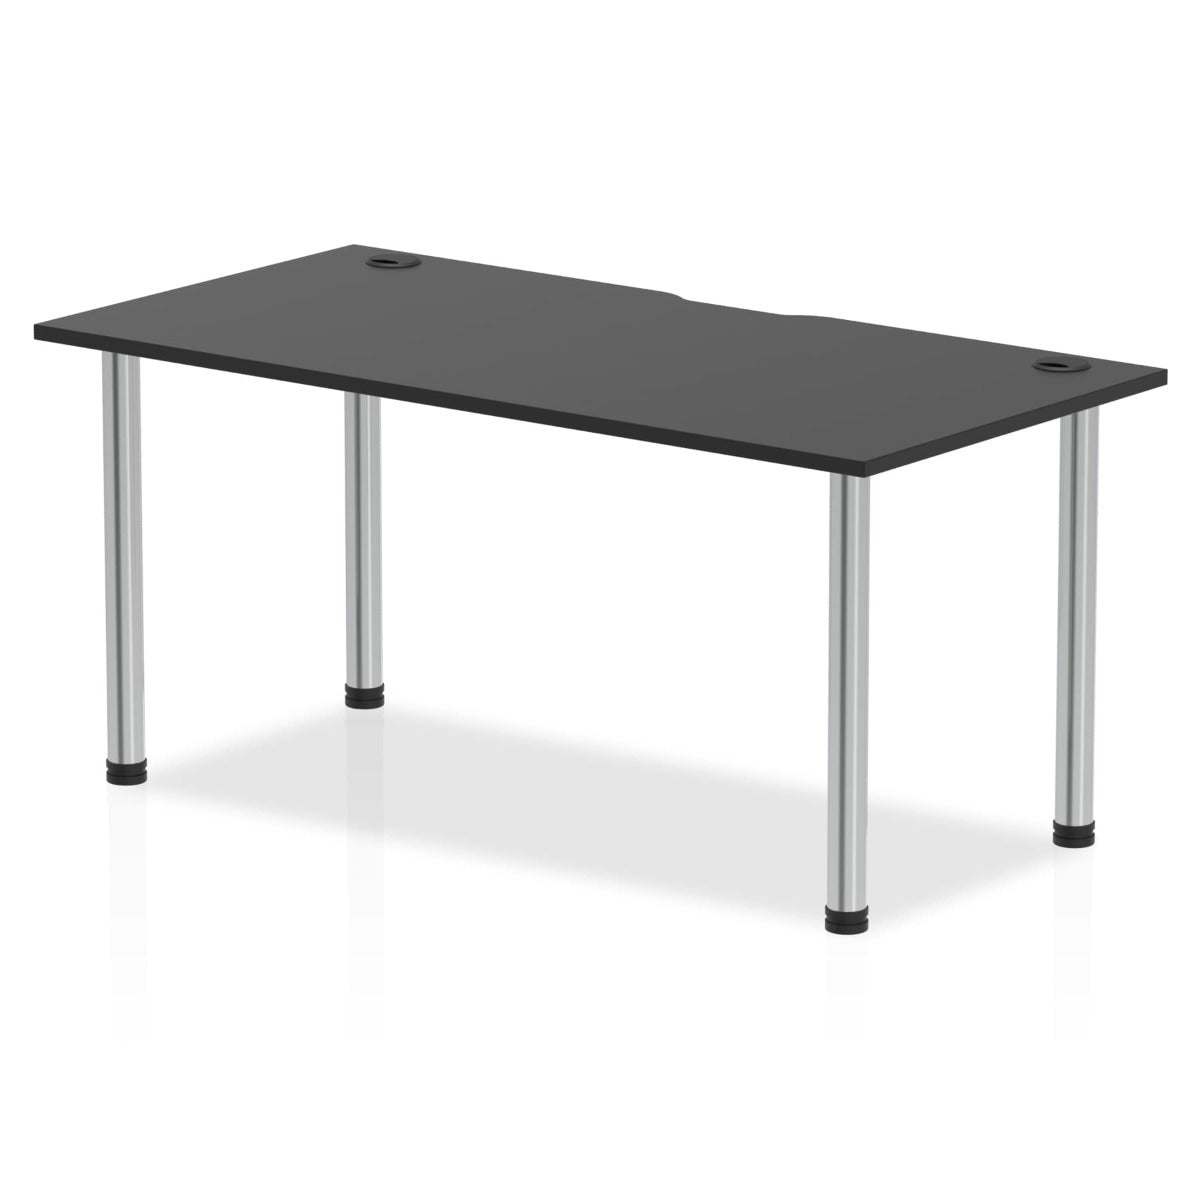 Impulse Black Series Office Desk - Multiple Sizes Available